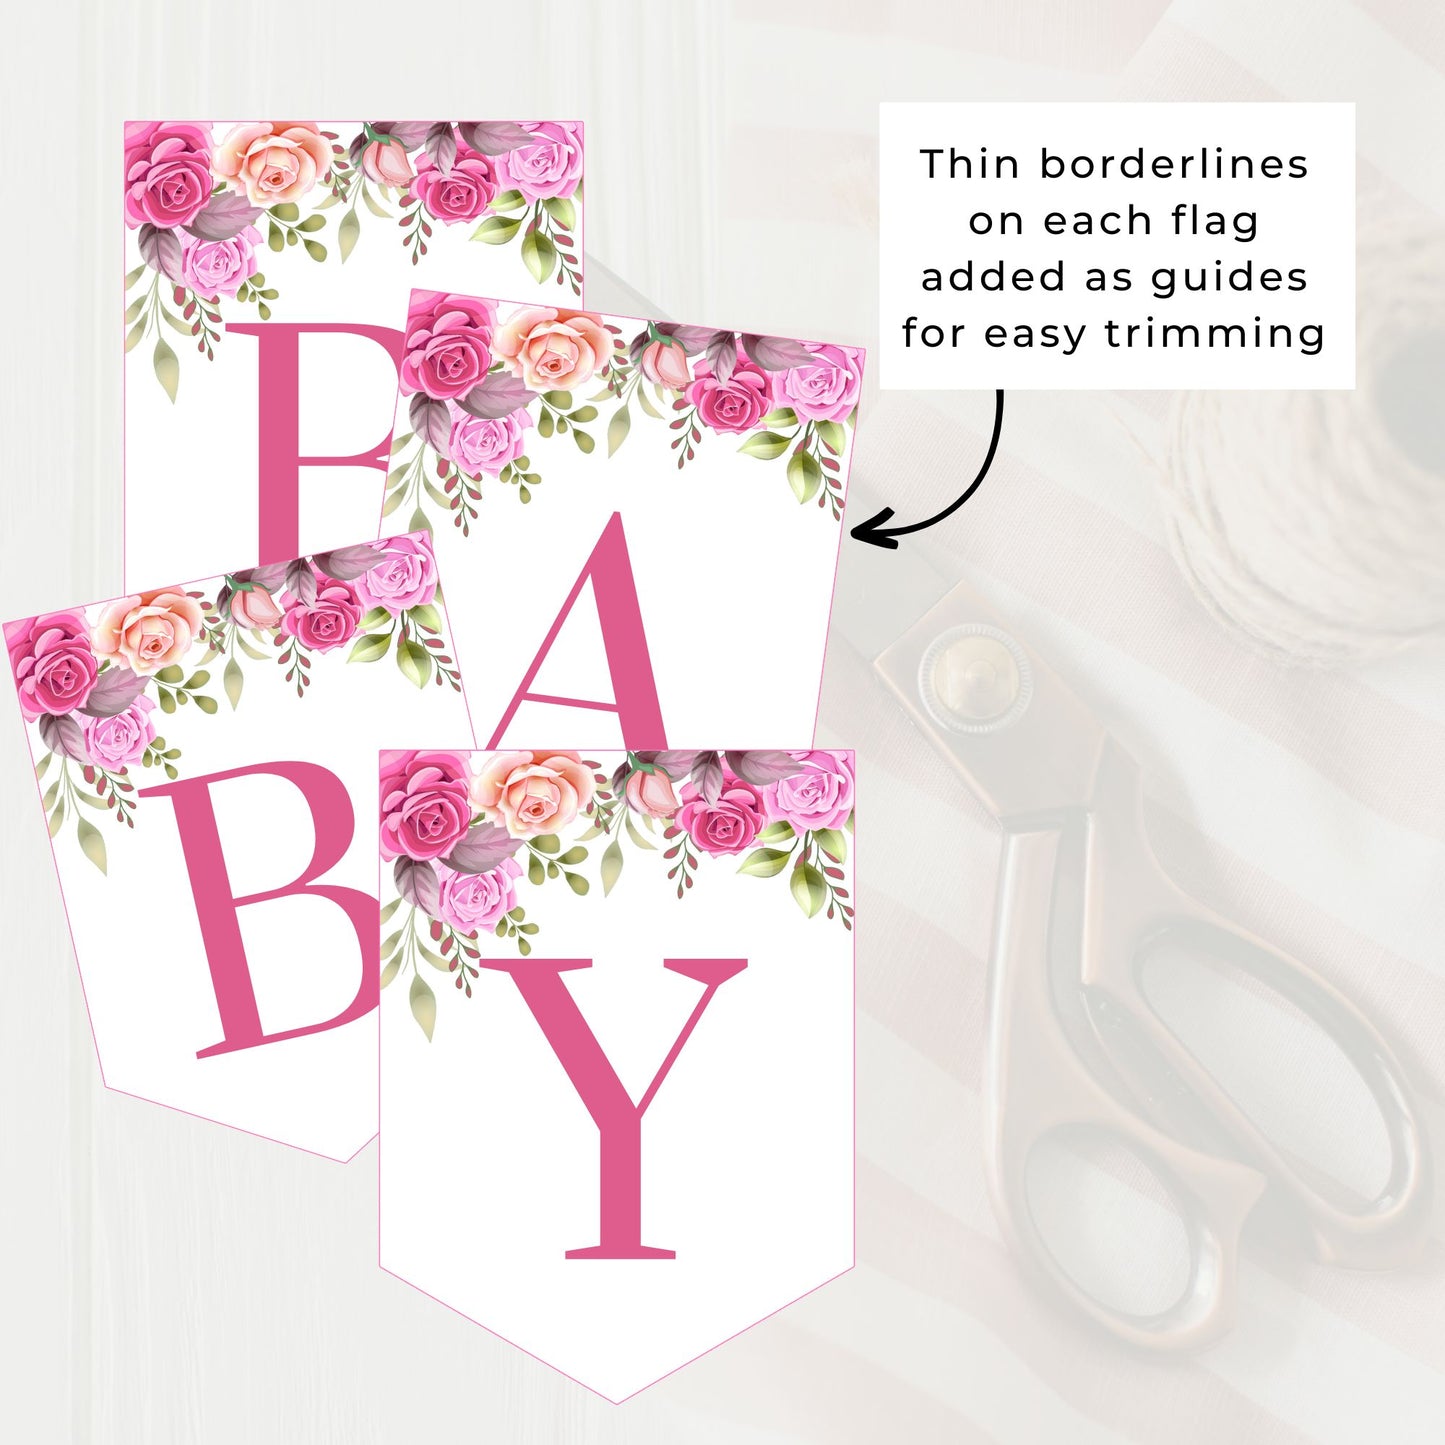 Hello Baby Printable Baby Shower Banner PDF